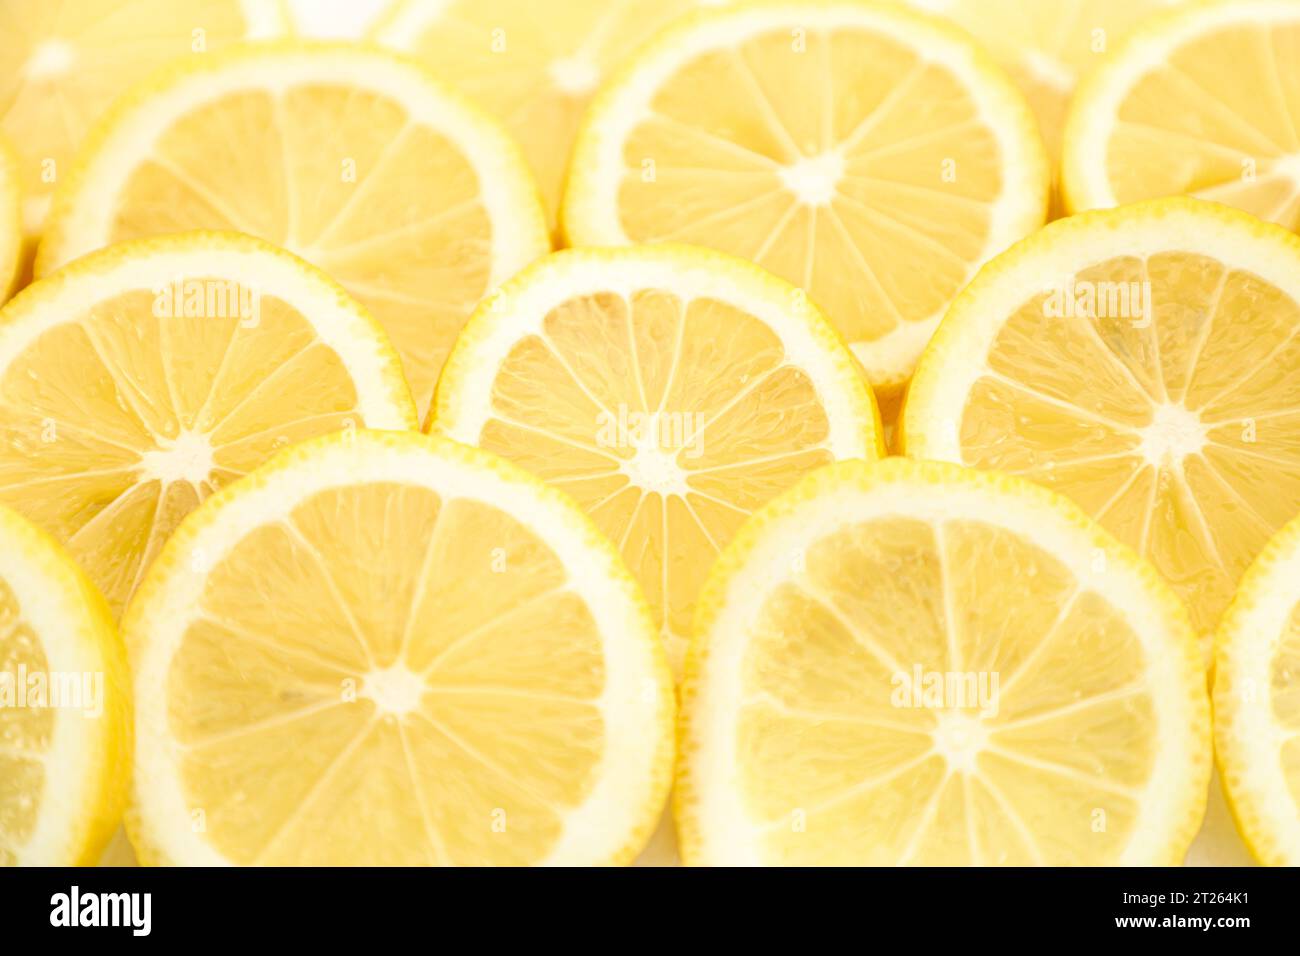 Juicy slices of lemon background Stock Photo